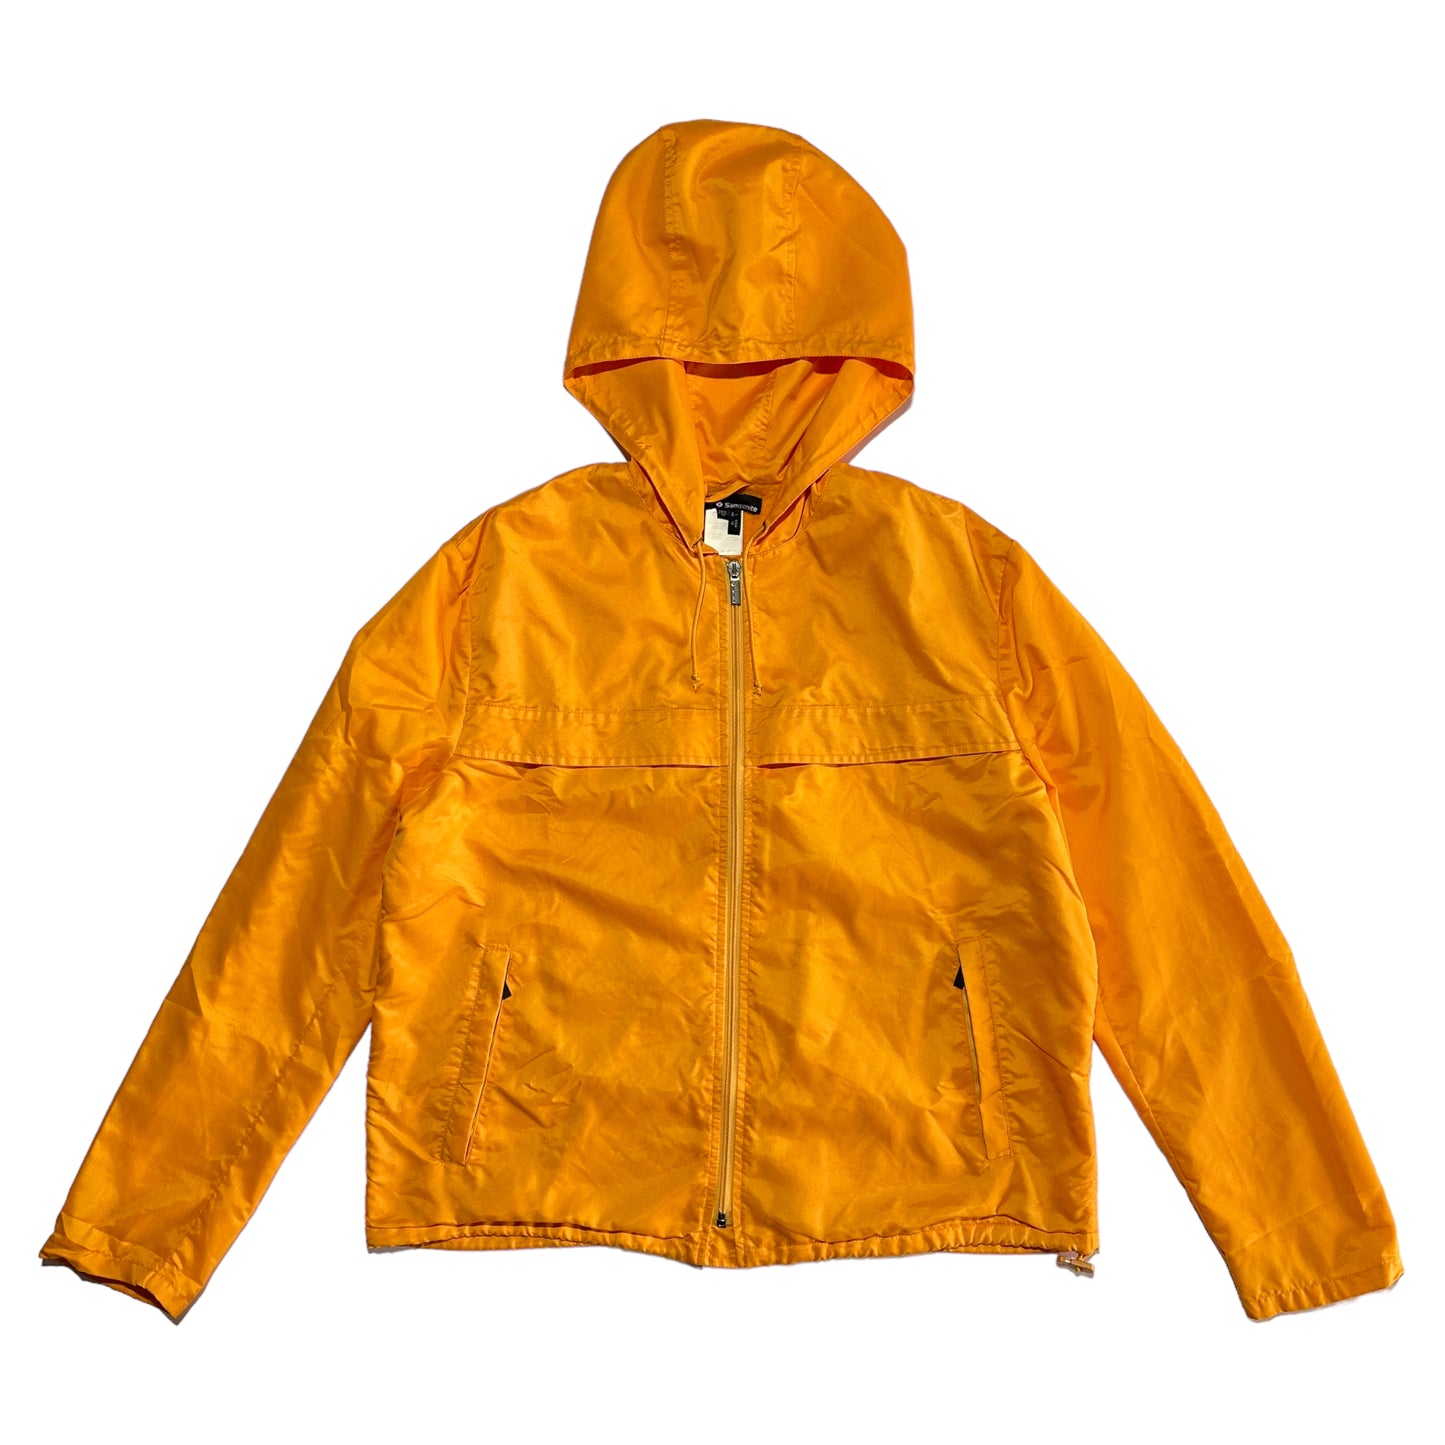 00's Samsonite ''Travel Wear Collection'' by Neil Barrett Orange Light Jacket (48)